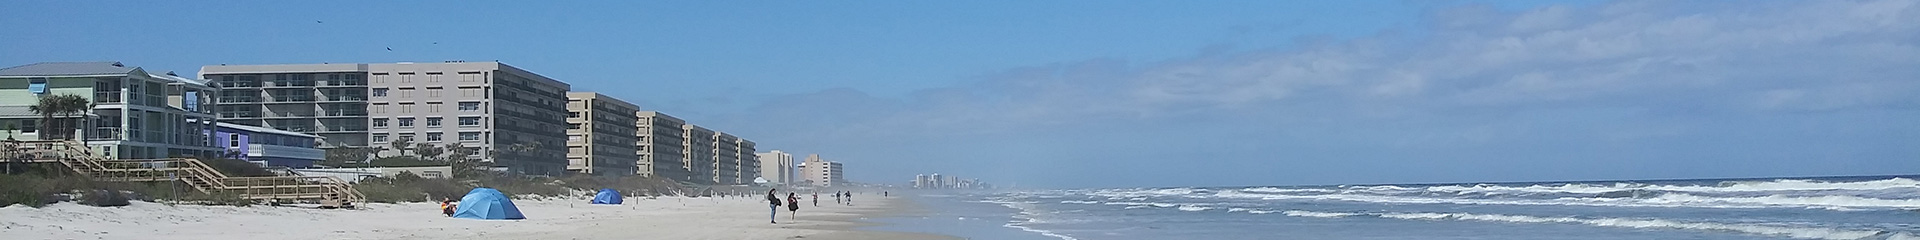 beachside view